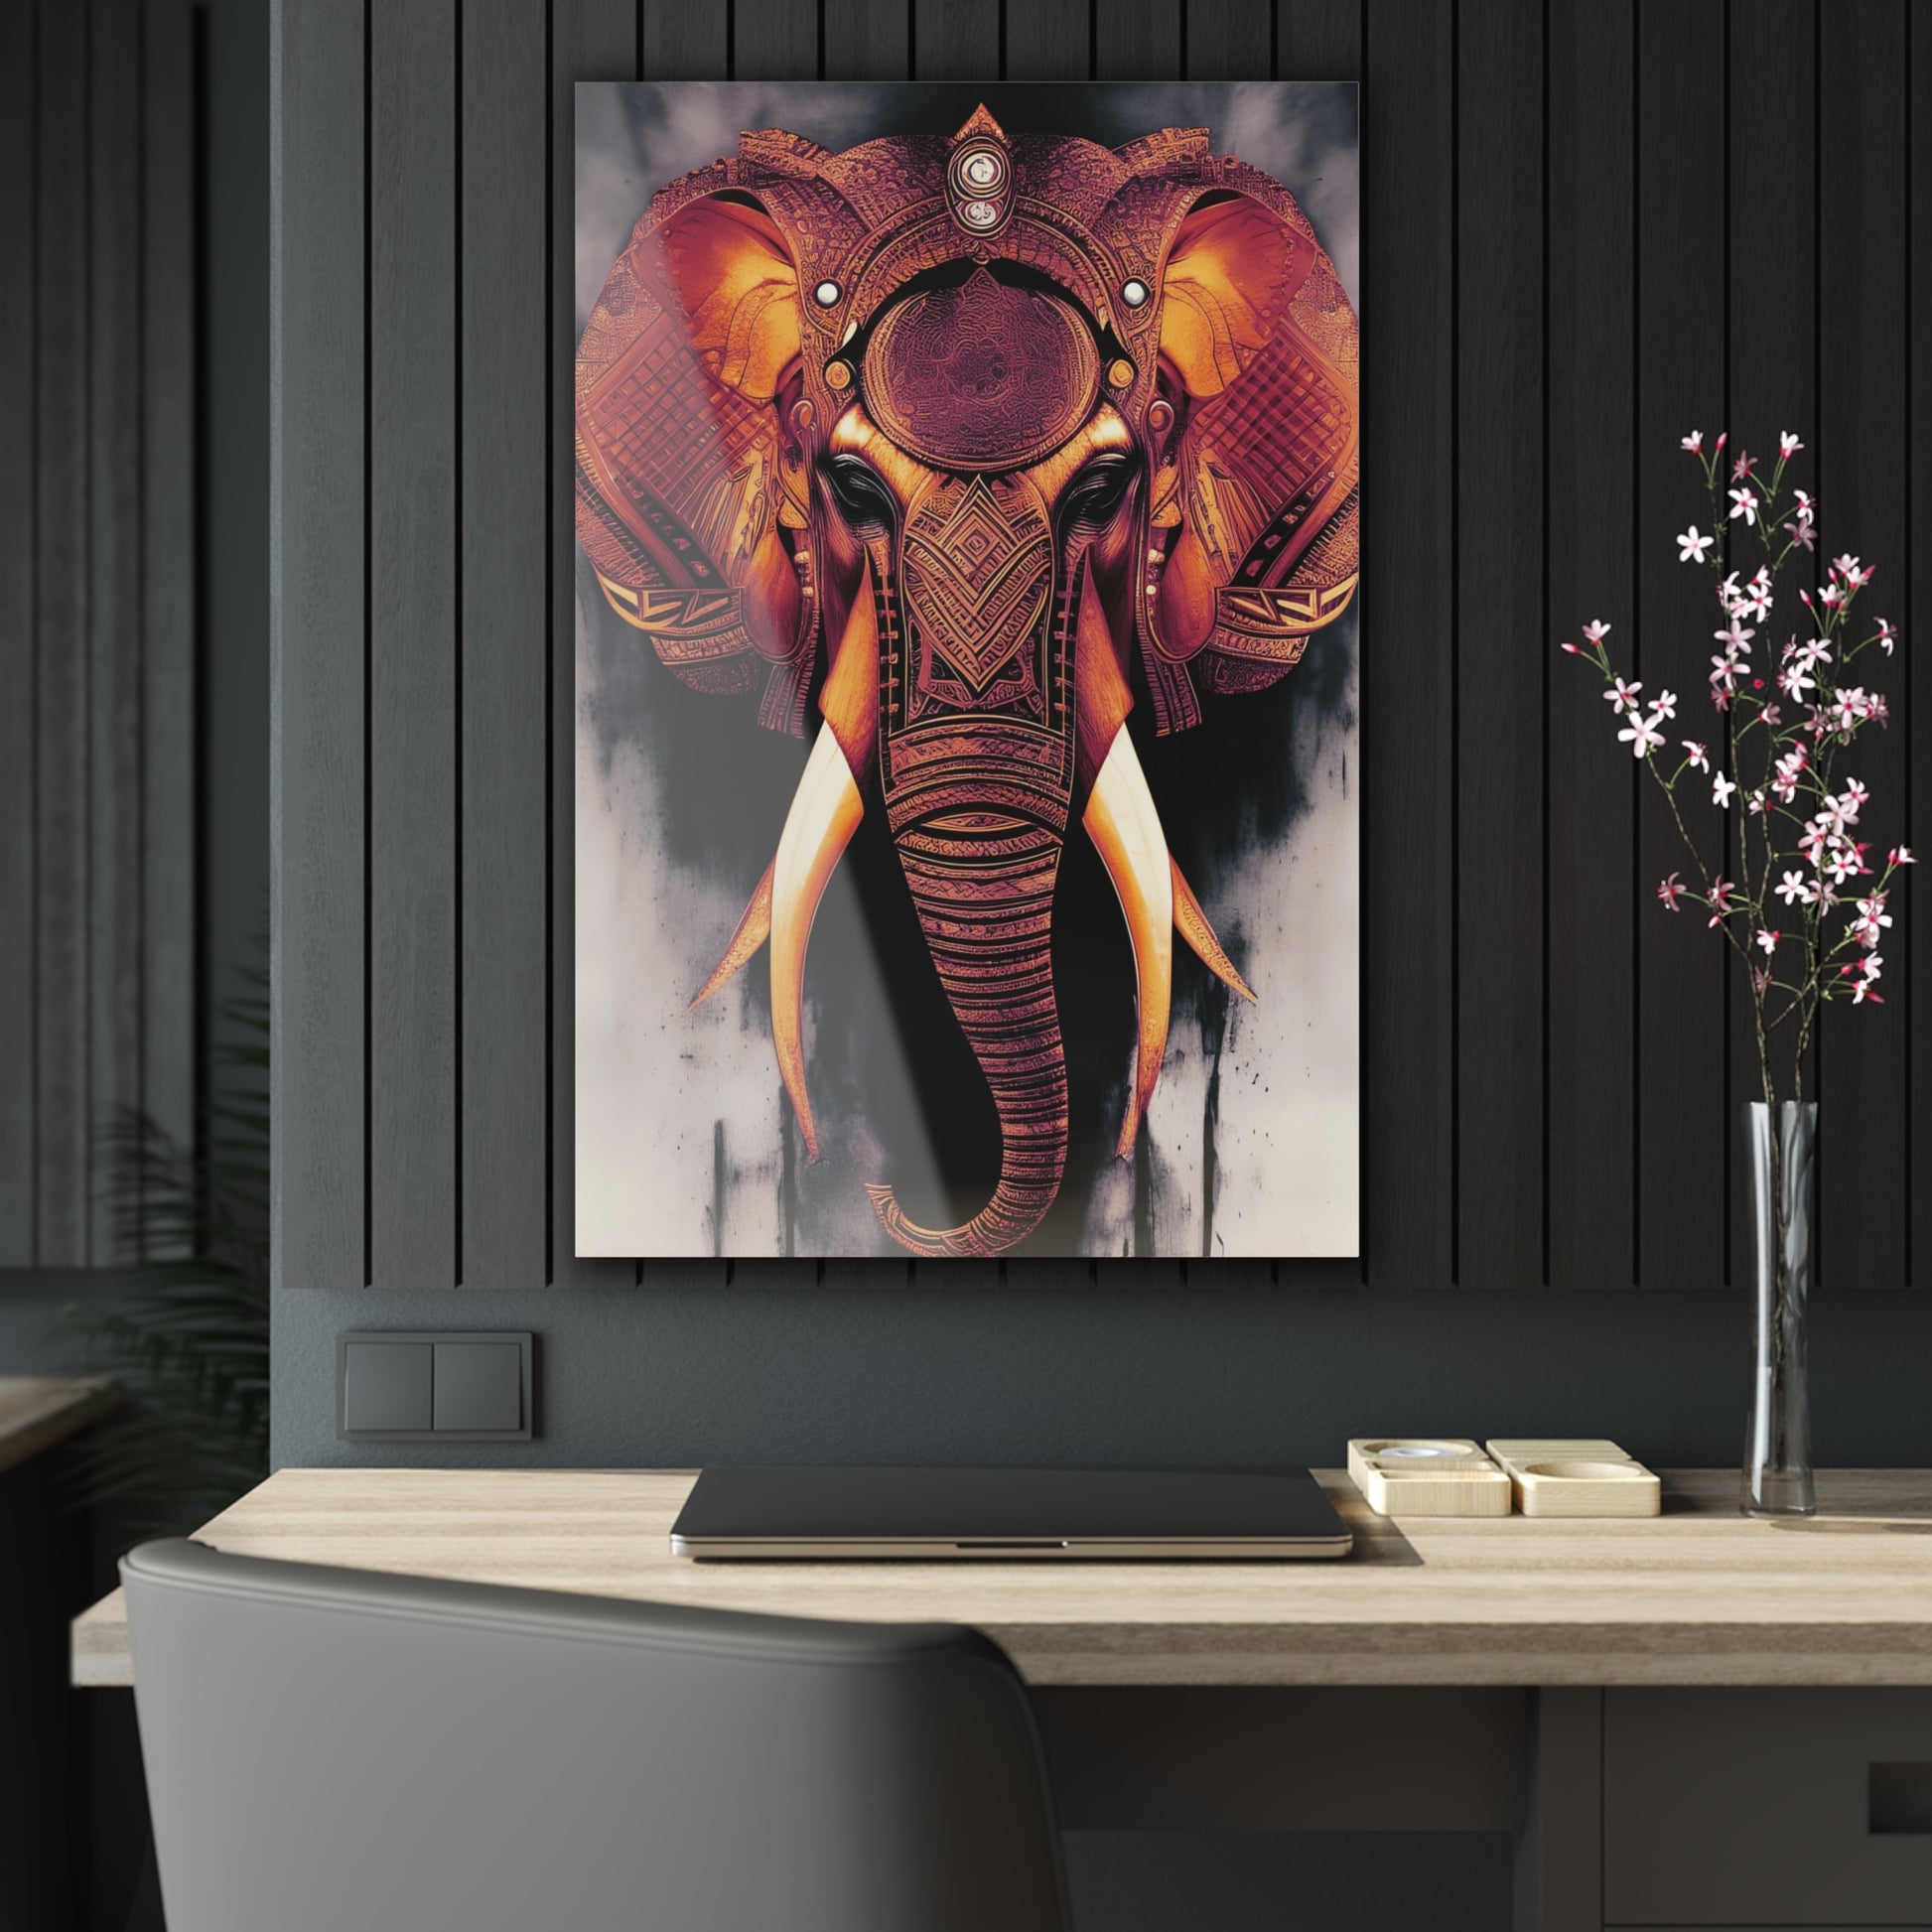 Elephant Themed Modern Wall Art - Copper and Gold Tribal Elephant Head on a Crystal Clear Acrylic Panel 24x36 hung on dark wall